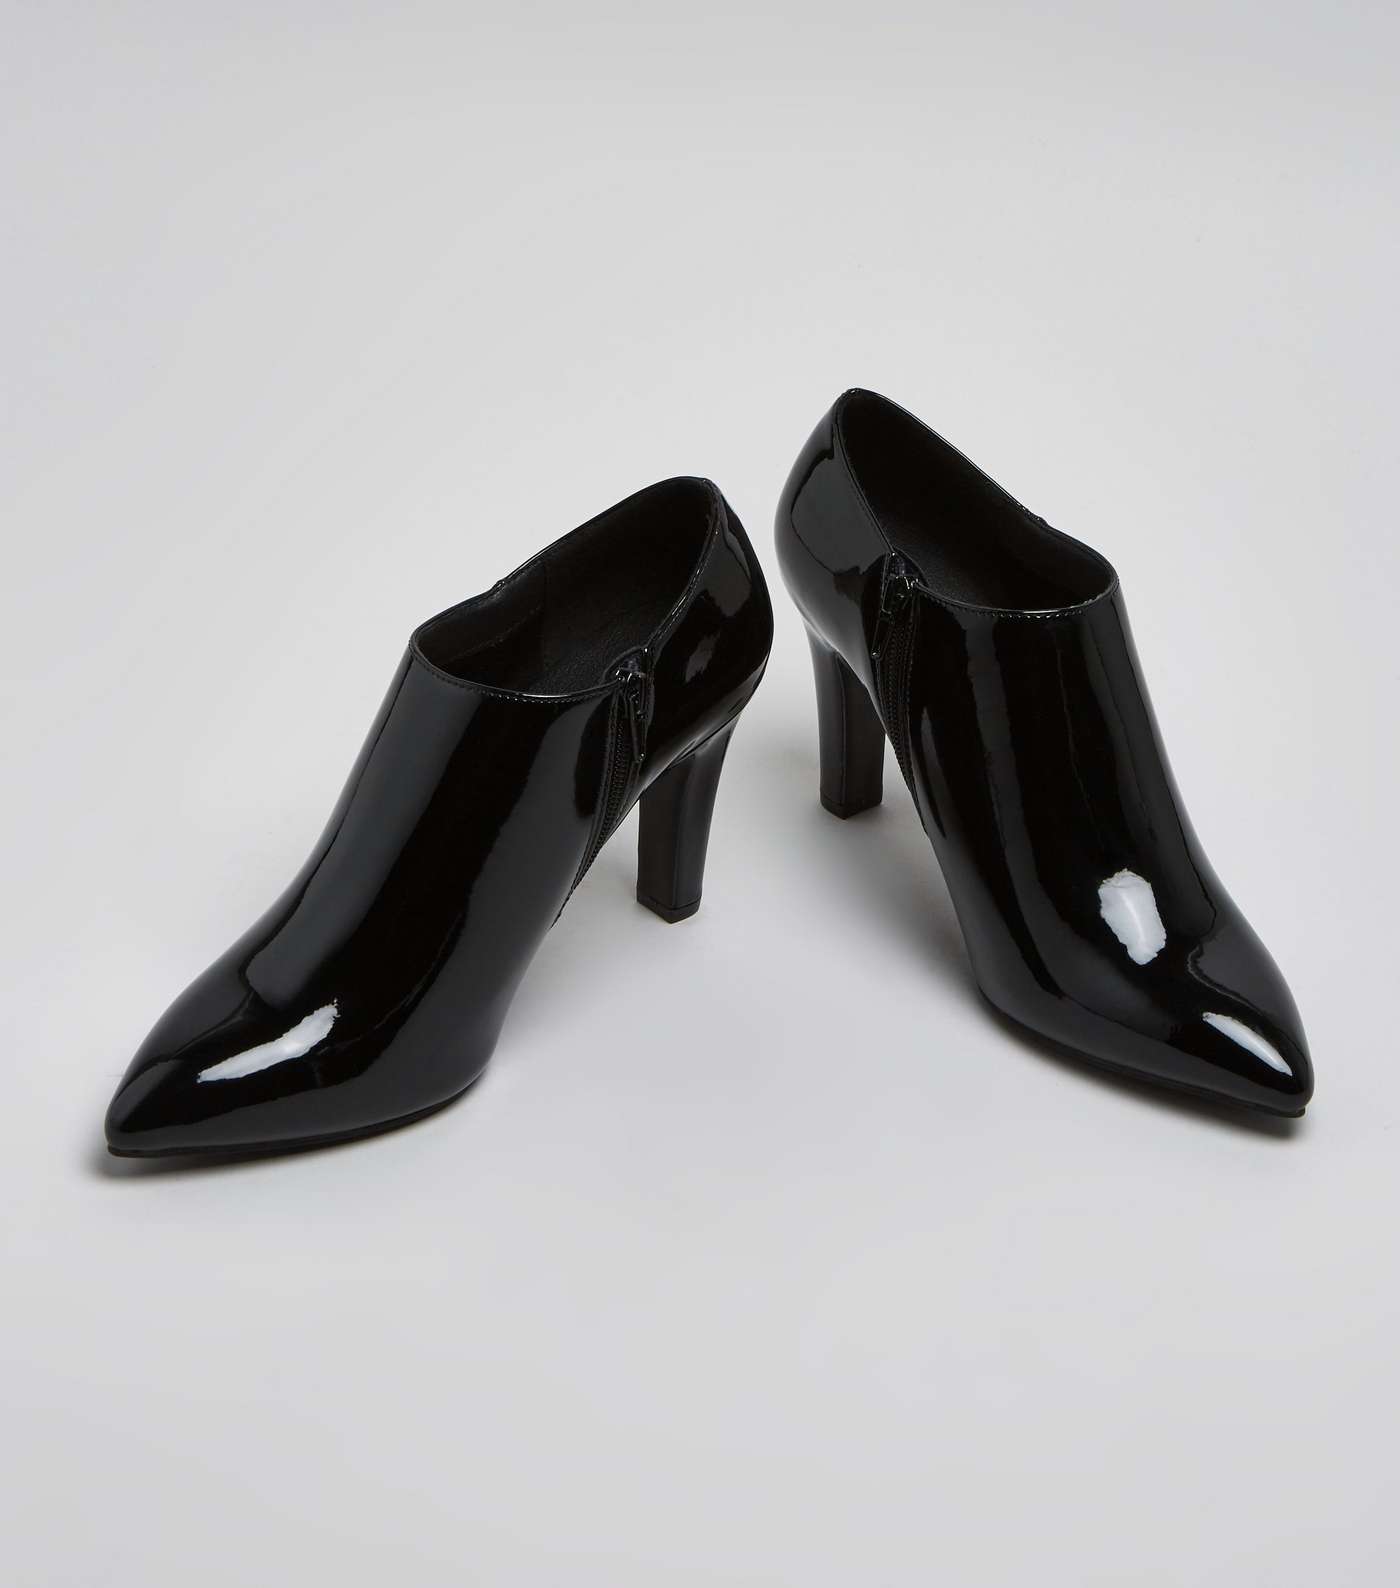 Black Patent Block Heel Shoe Boots Image 2